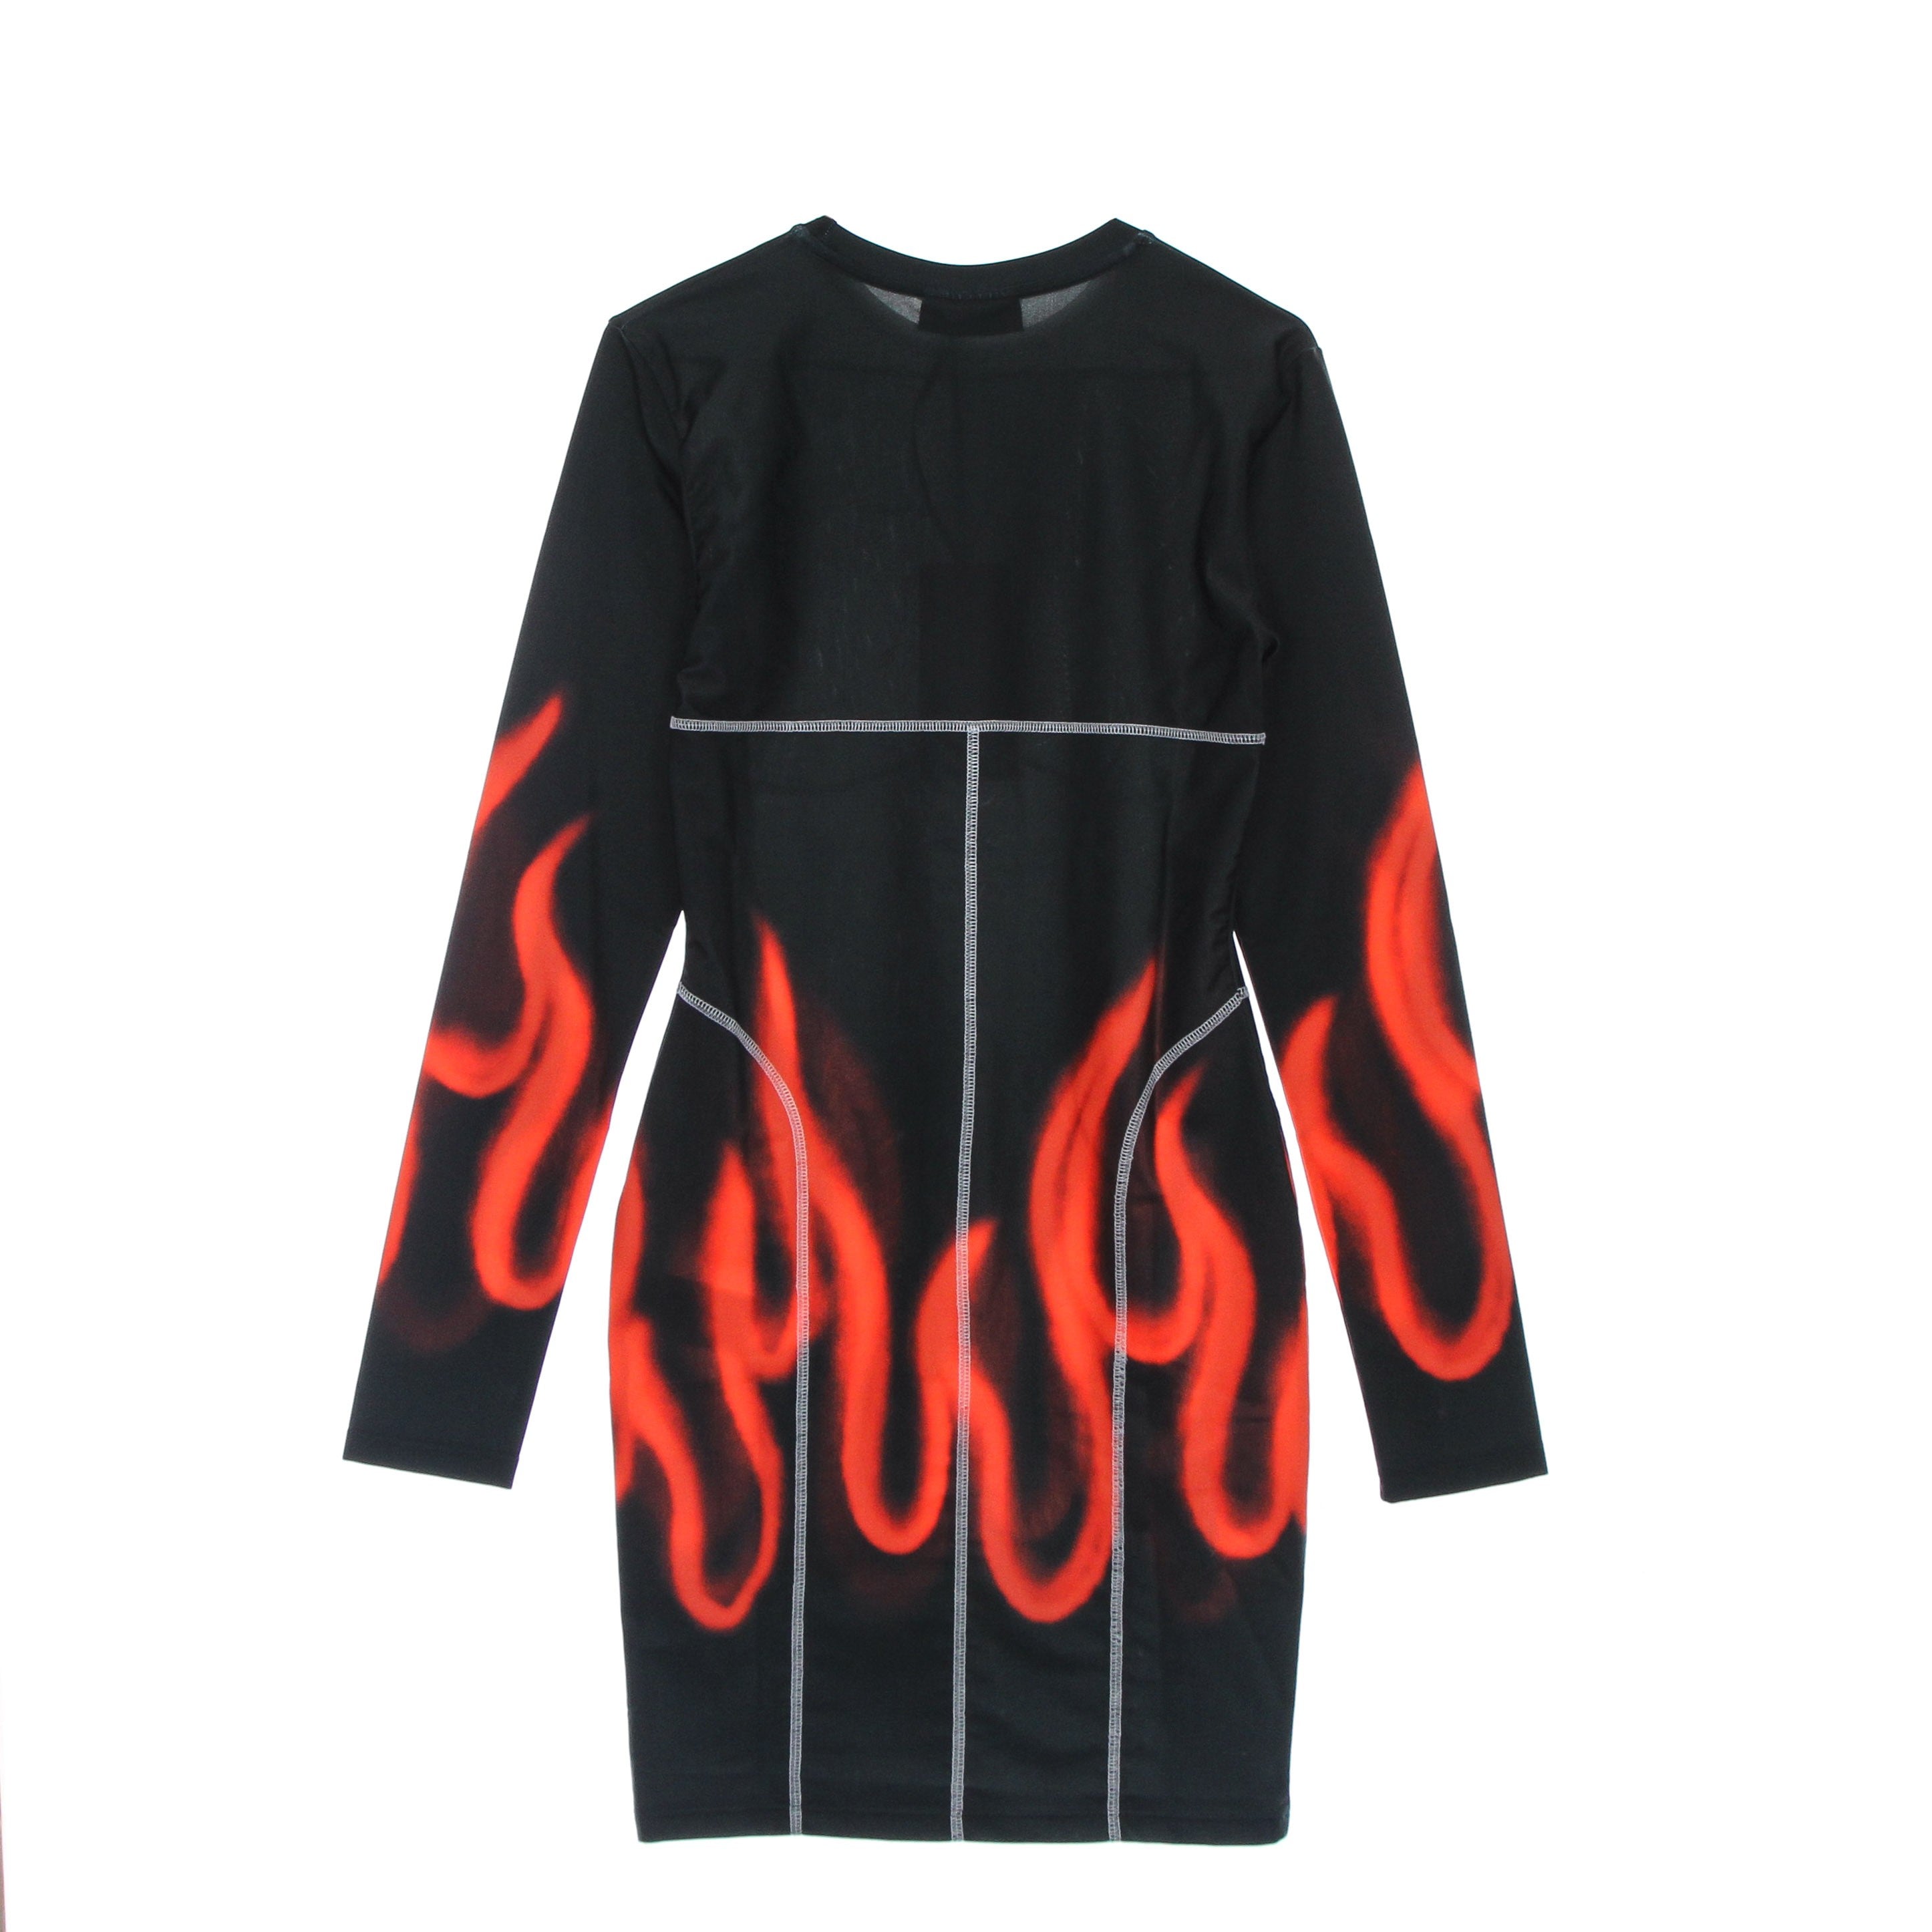 Women's Spray Flames Dress Black/red